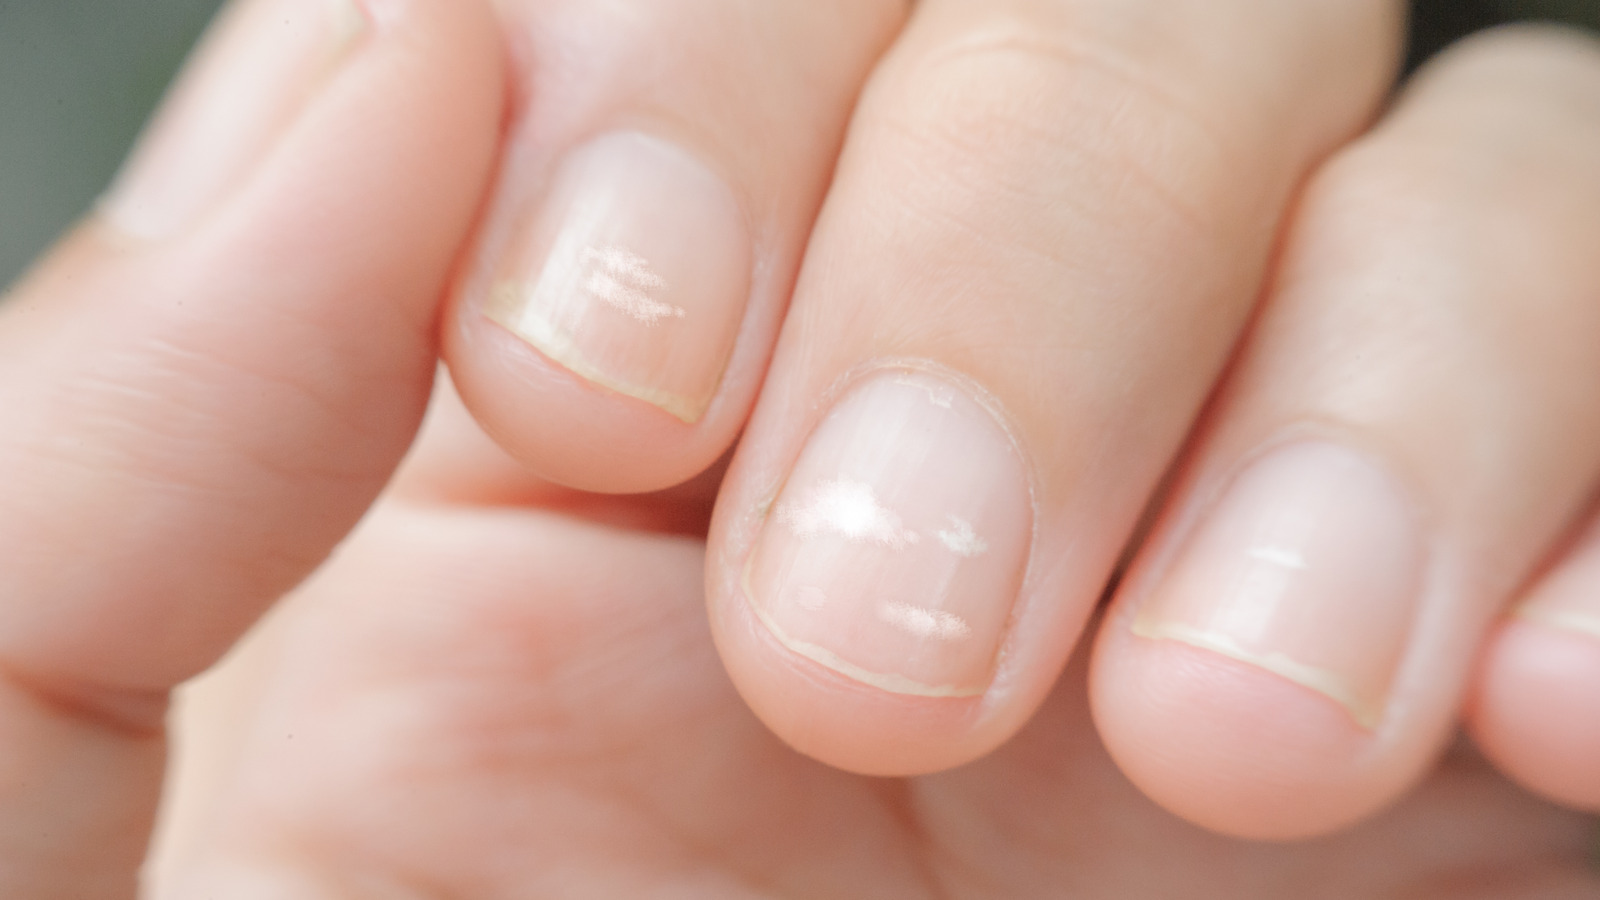 Banish white spots on nails - Shop Nailner Nail Fungus Treatment.